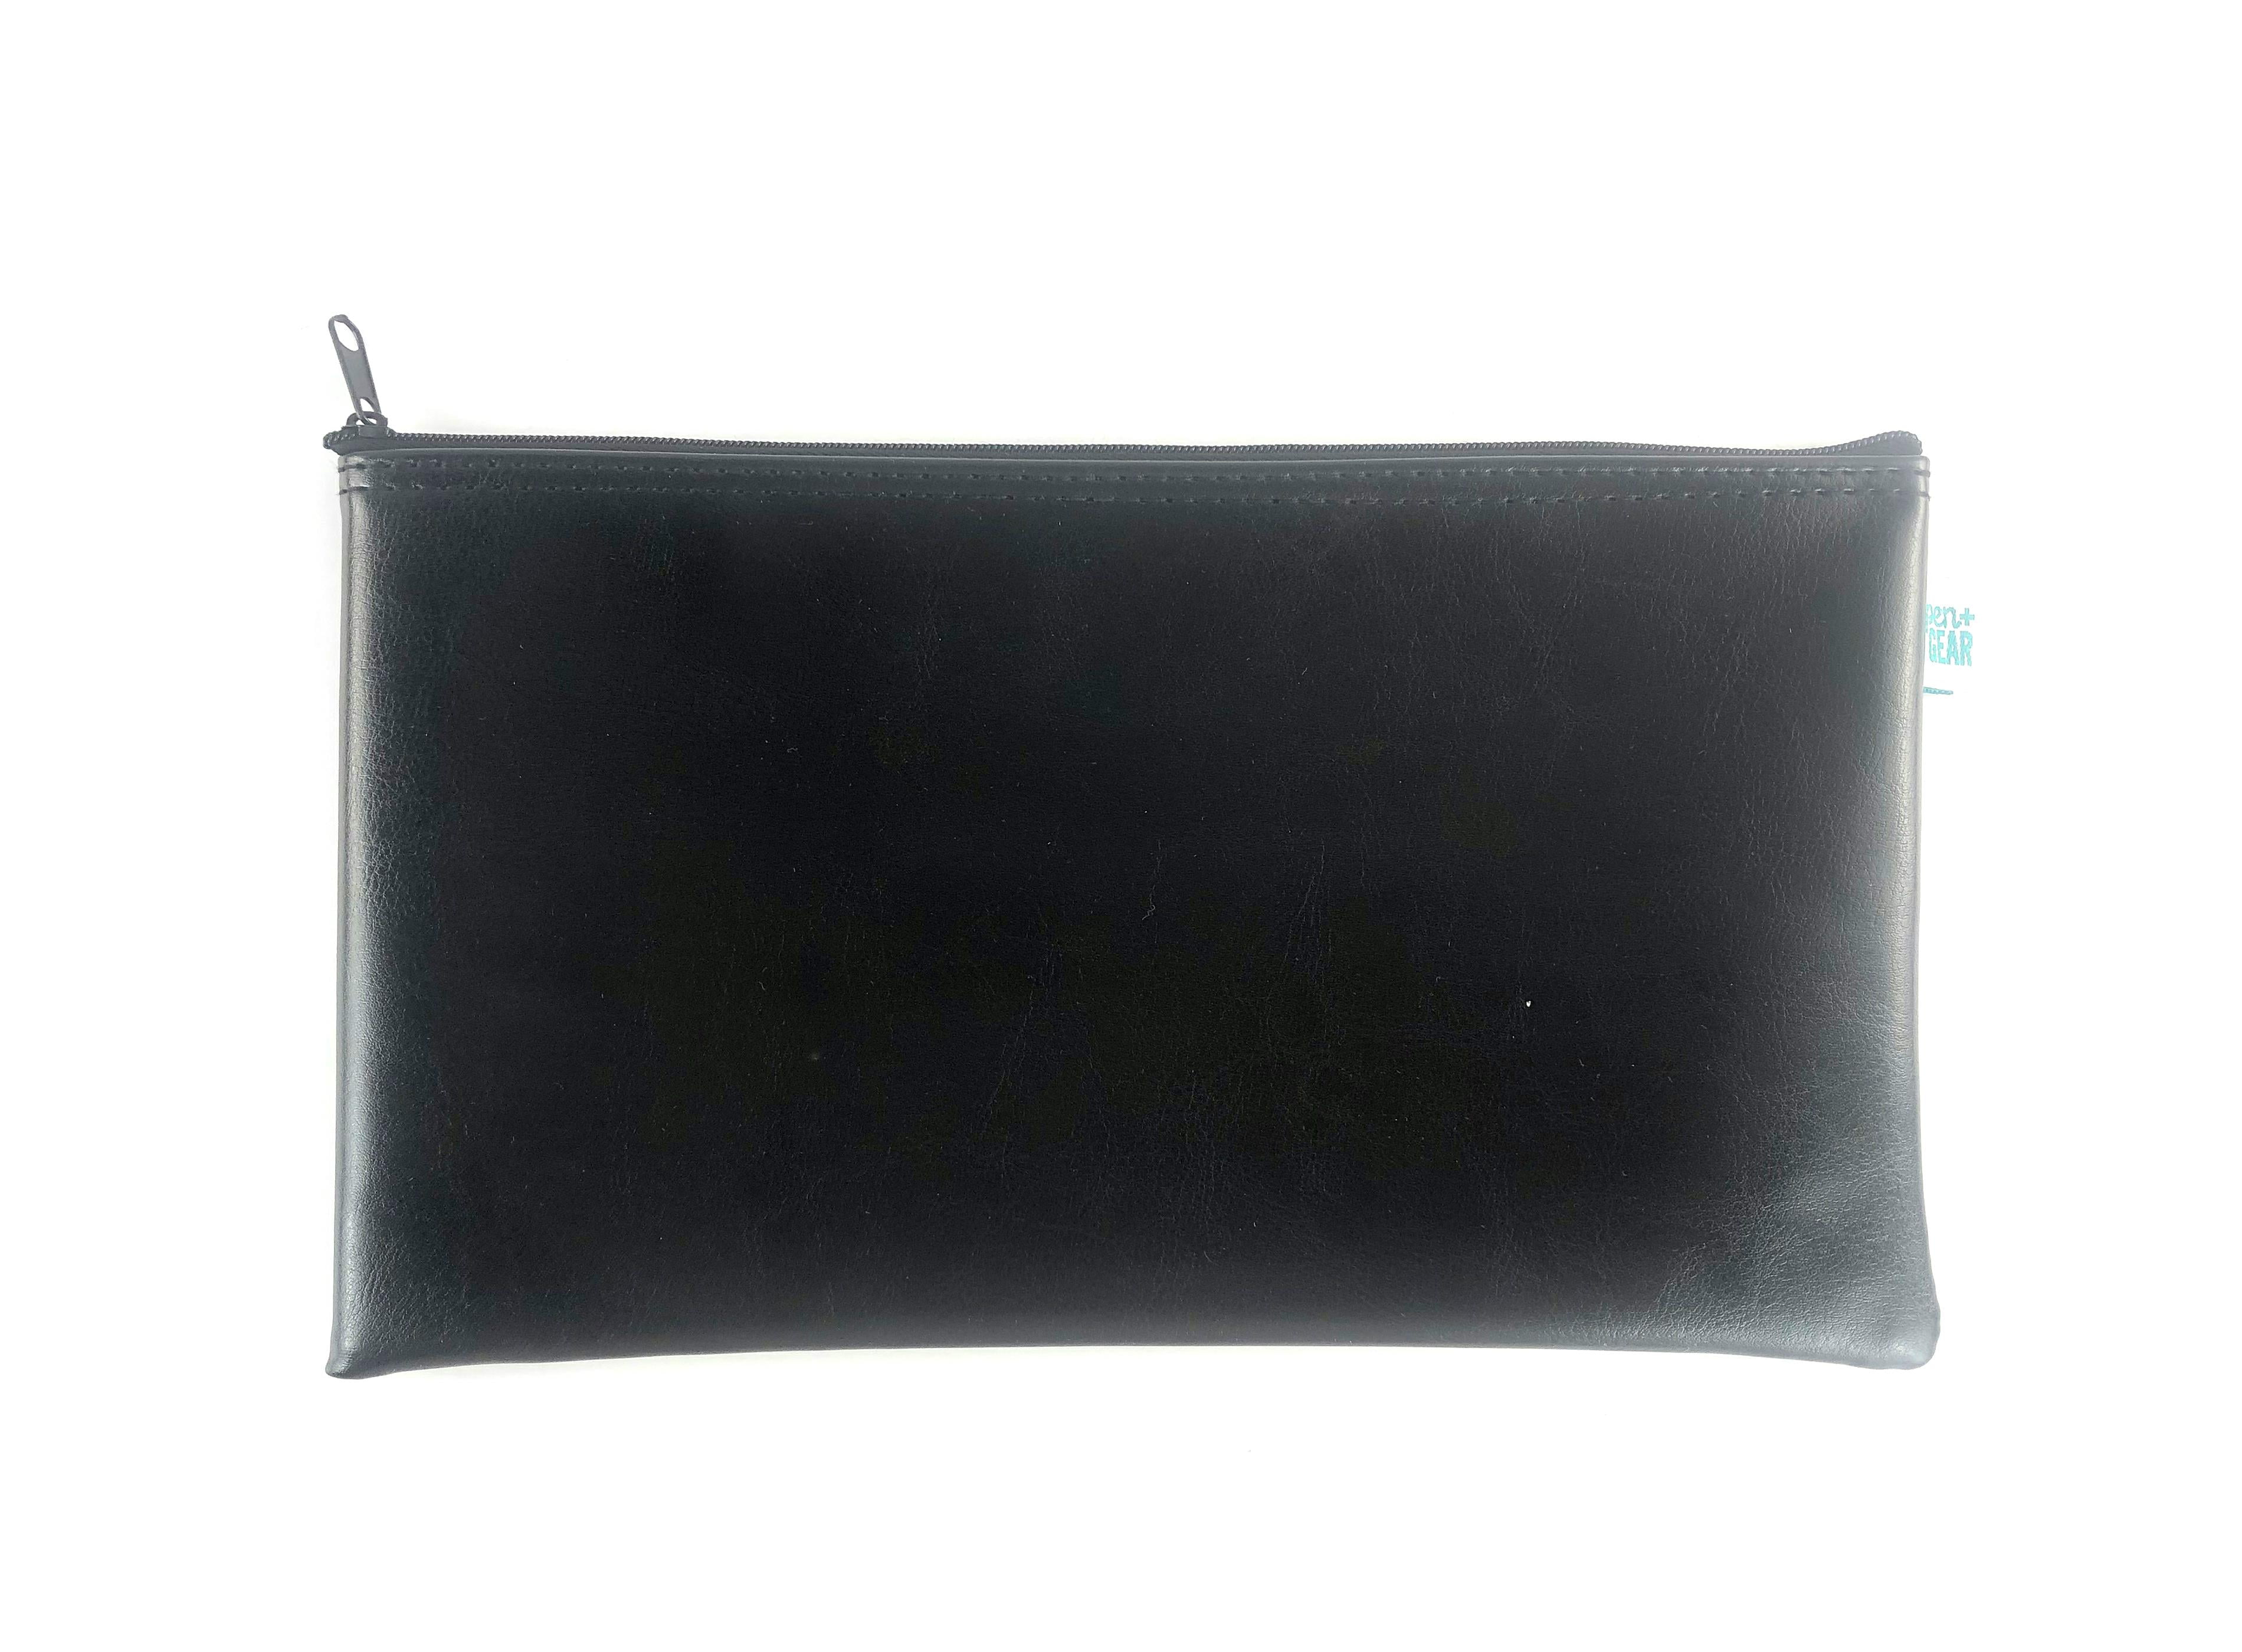 Pen + Gear Money Pouch Security Deposit Utility Zipper Bags, Black